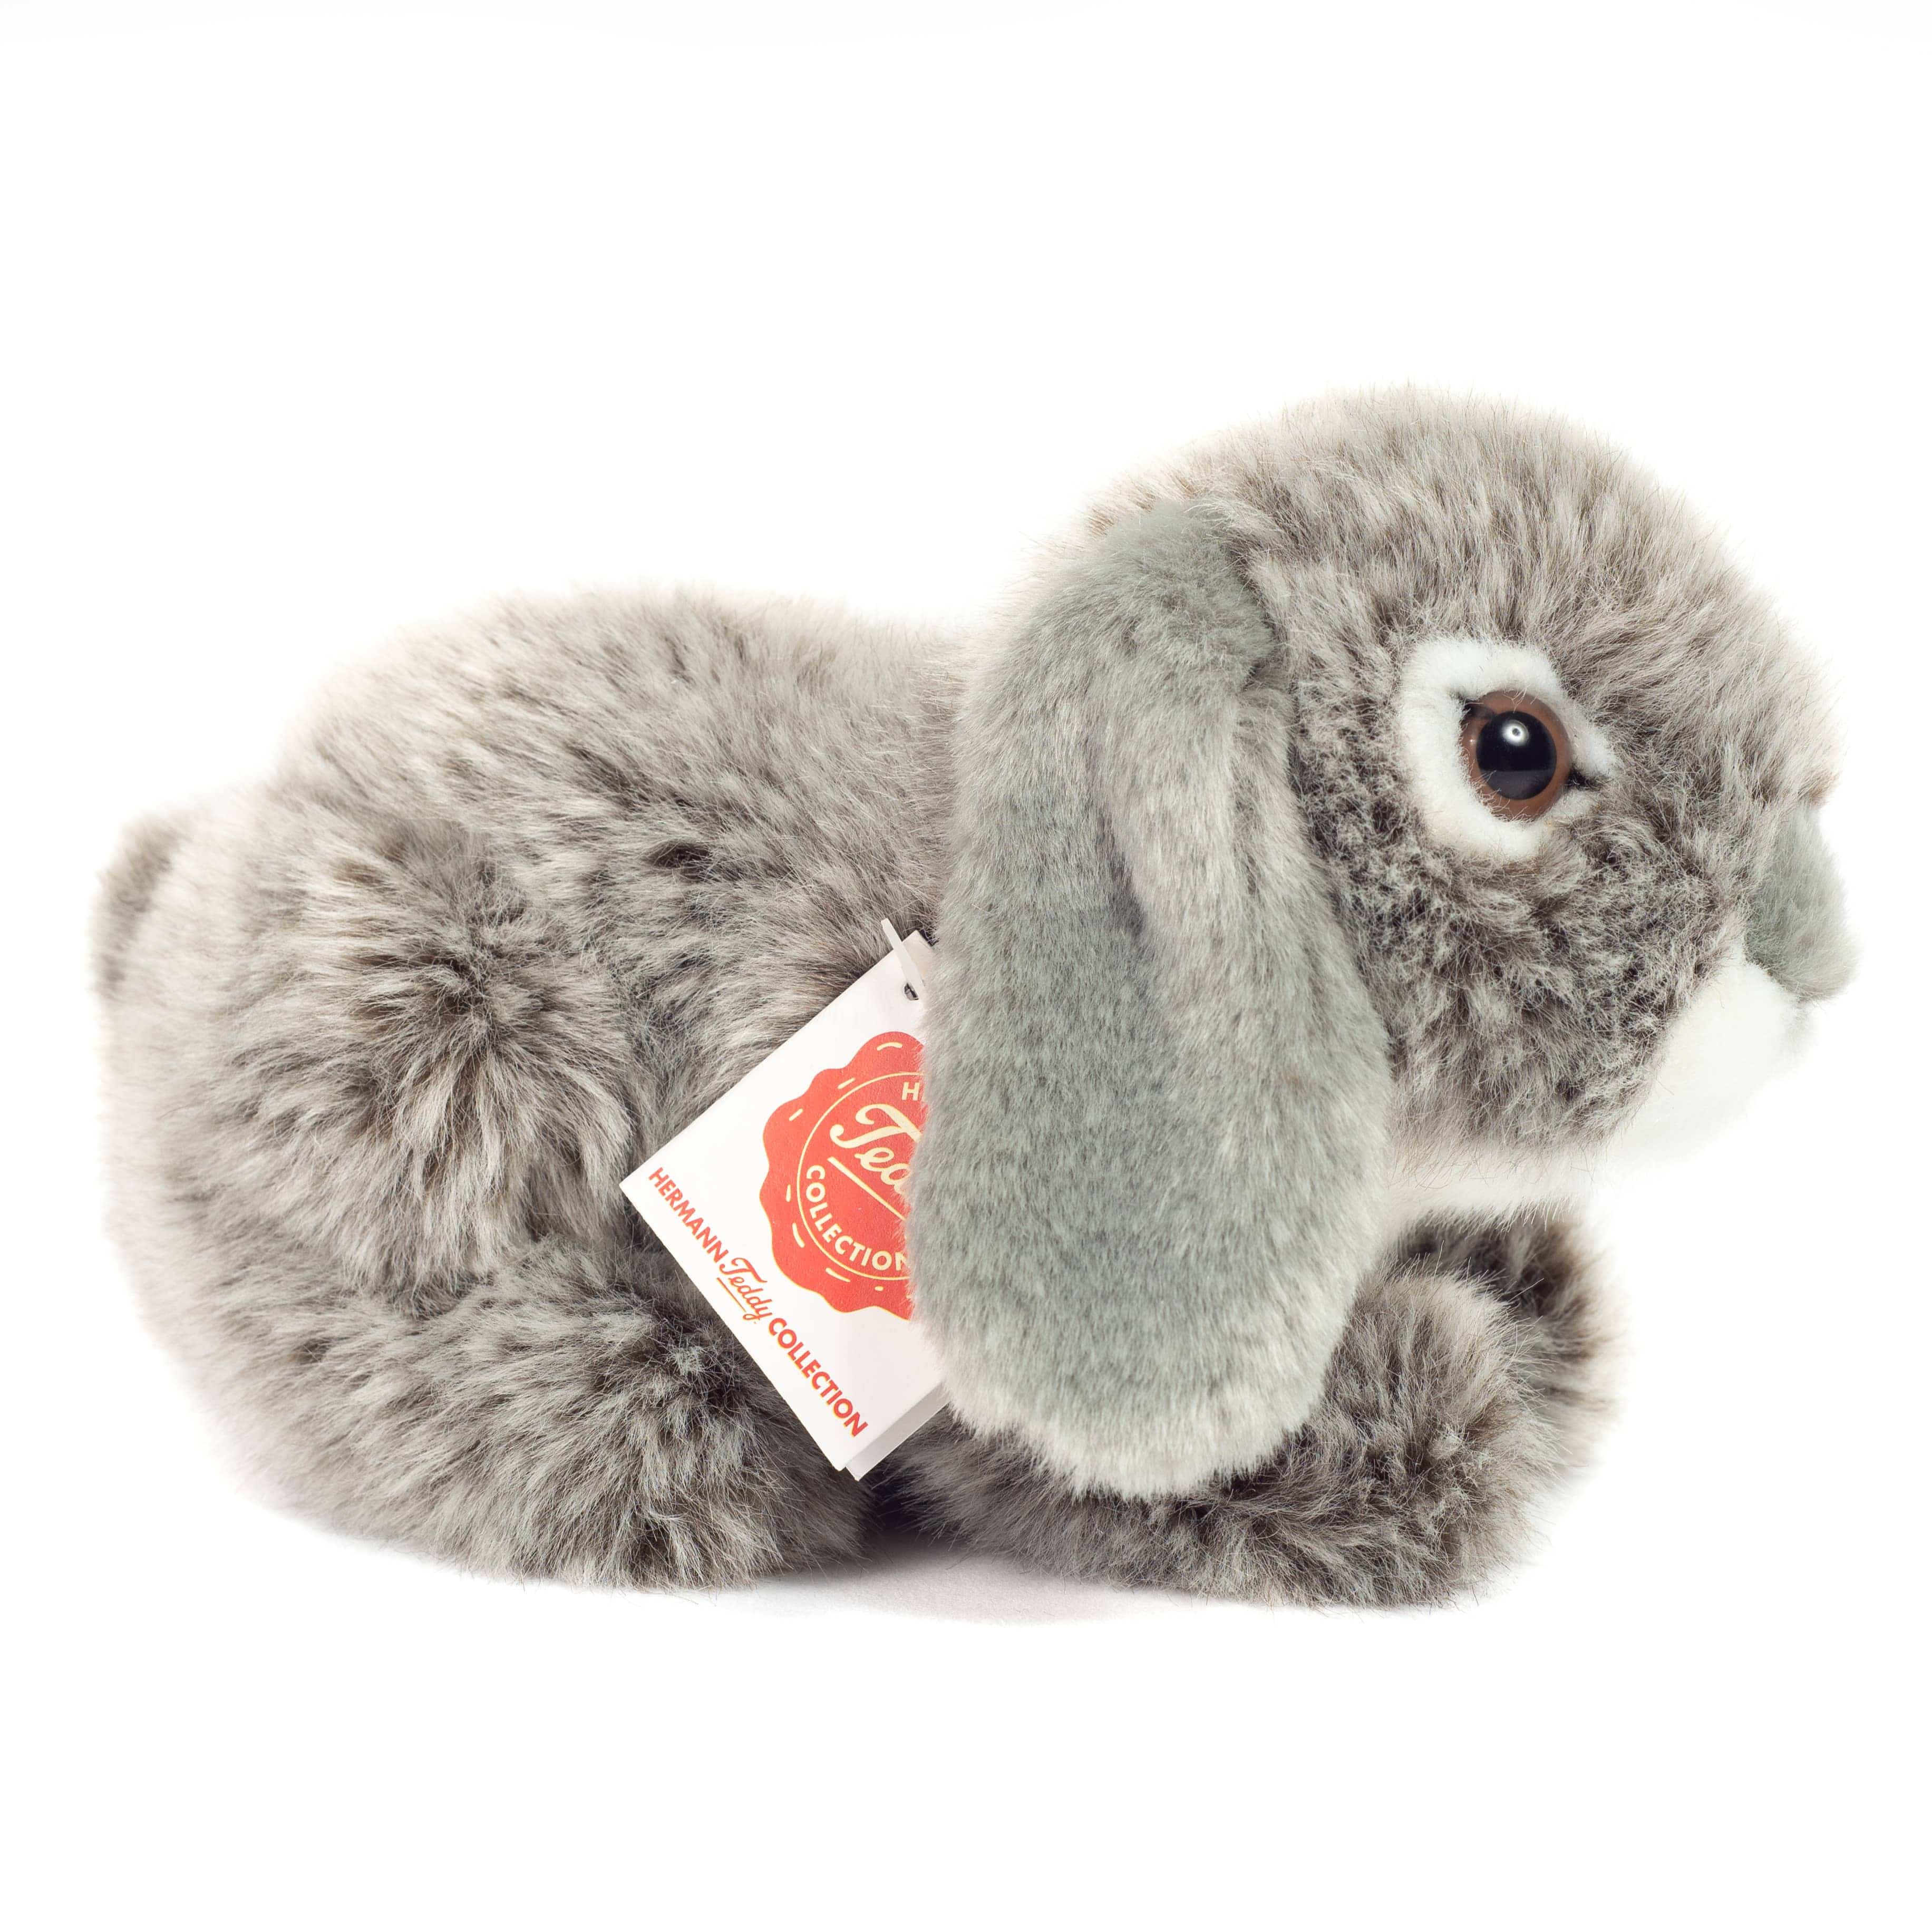 Grey Floppy Earred Bunny Rabbit 18 cm - plush soft toy by Teddy Hermann